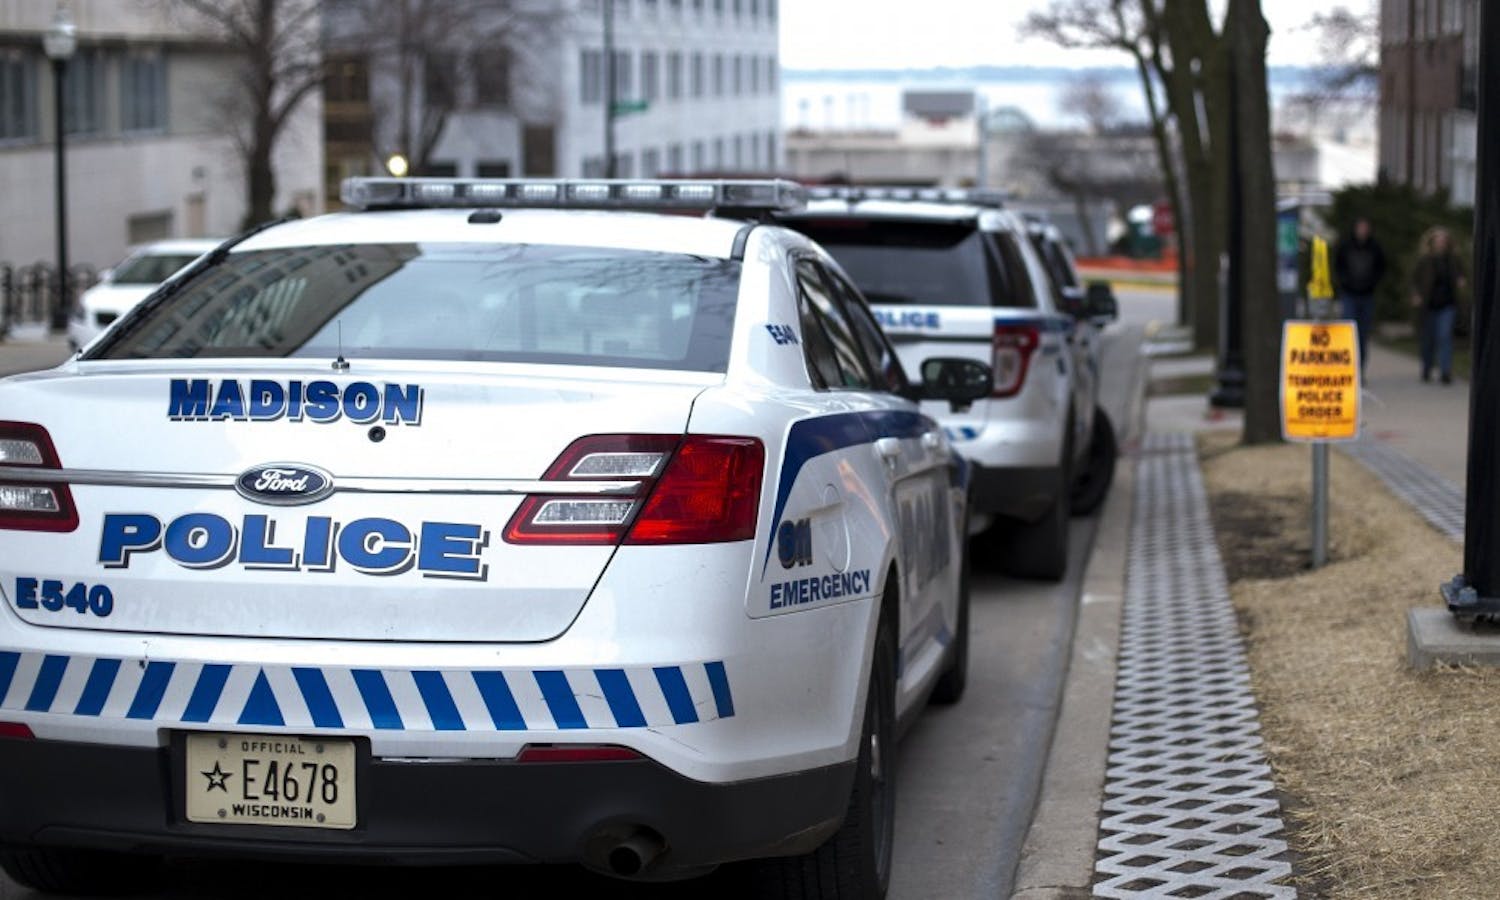 Photo of Madison police car.